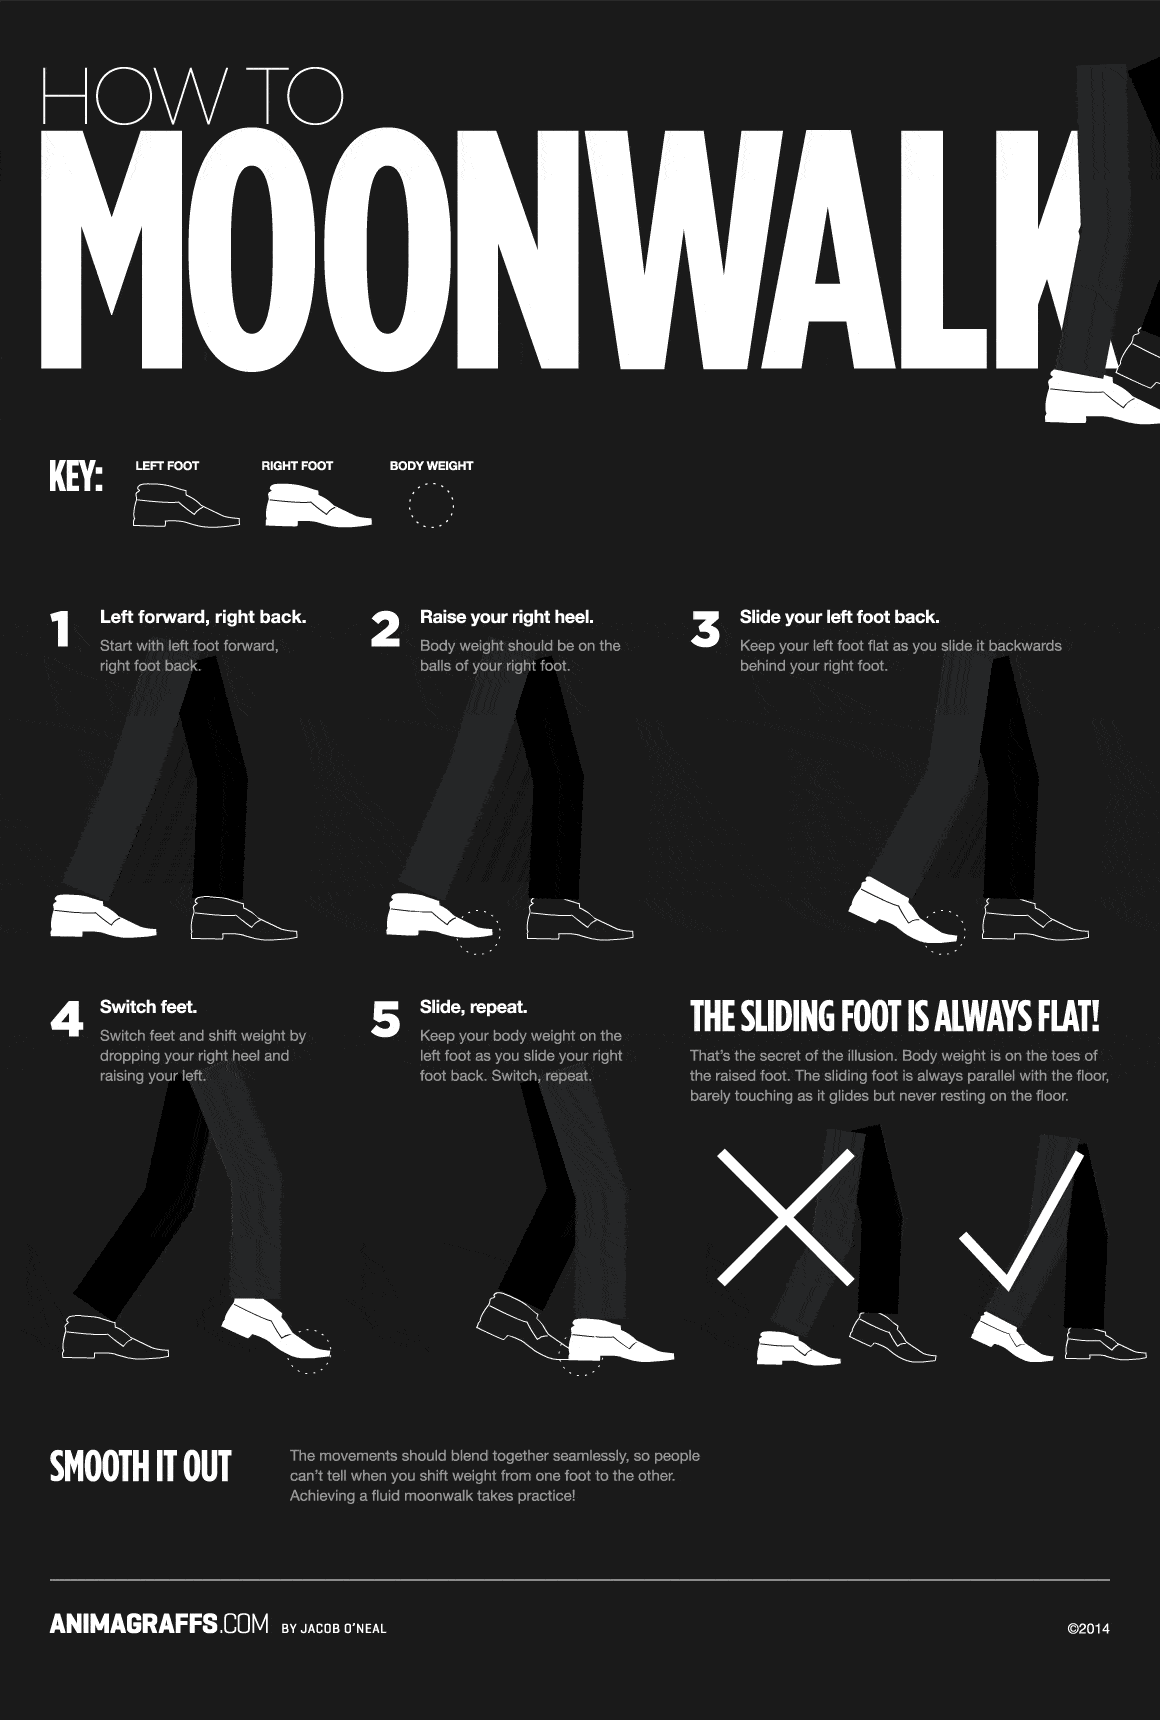 moonwalk